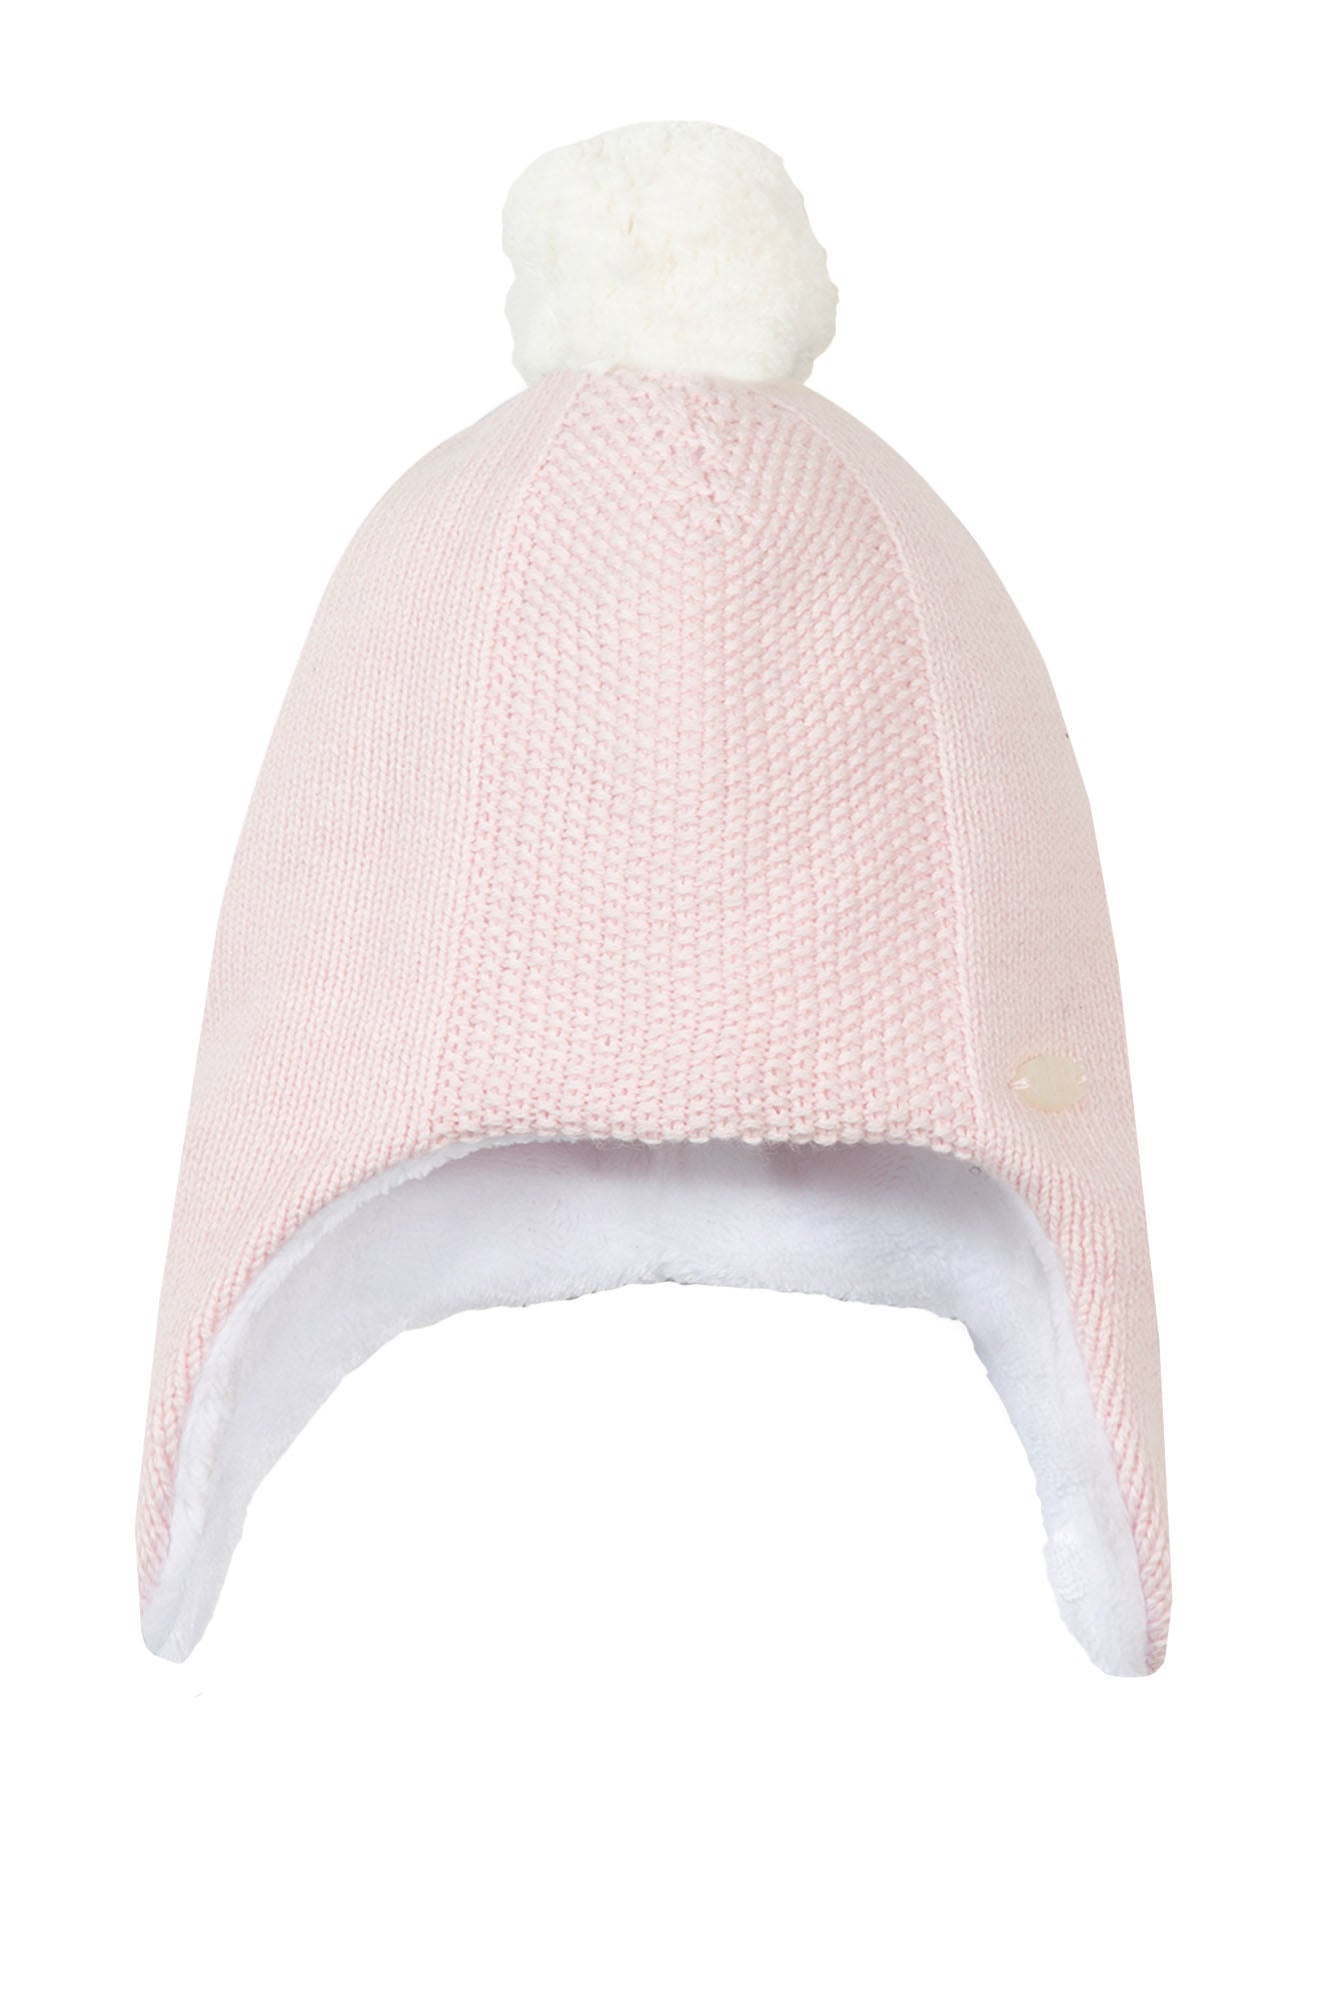 Hat  - Pale Pink Knit Light Pink / T2